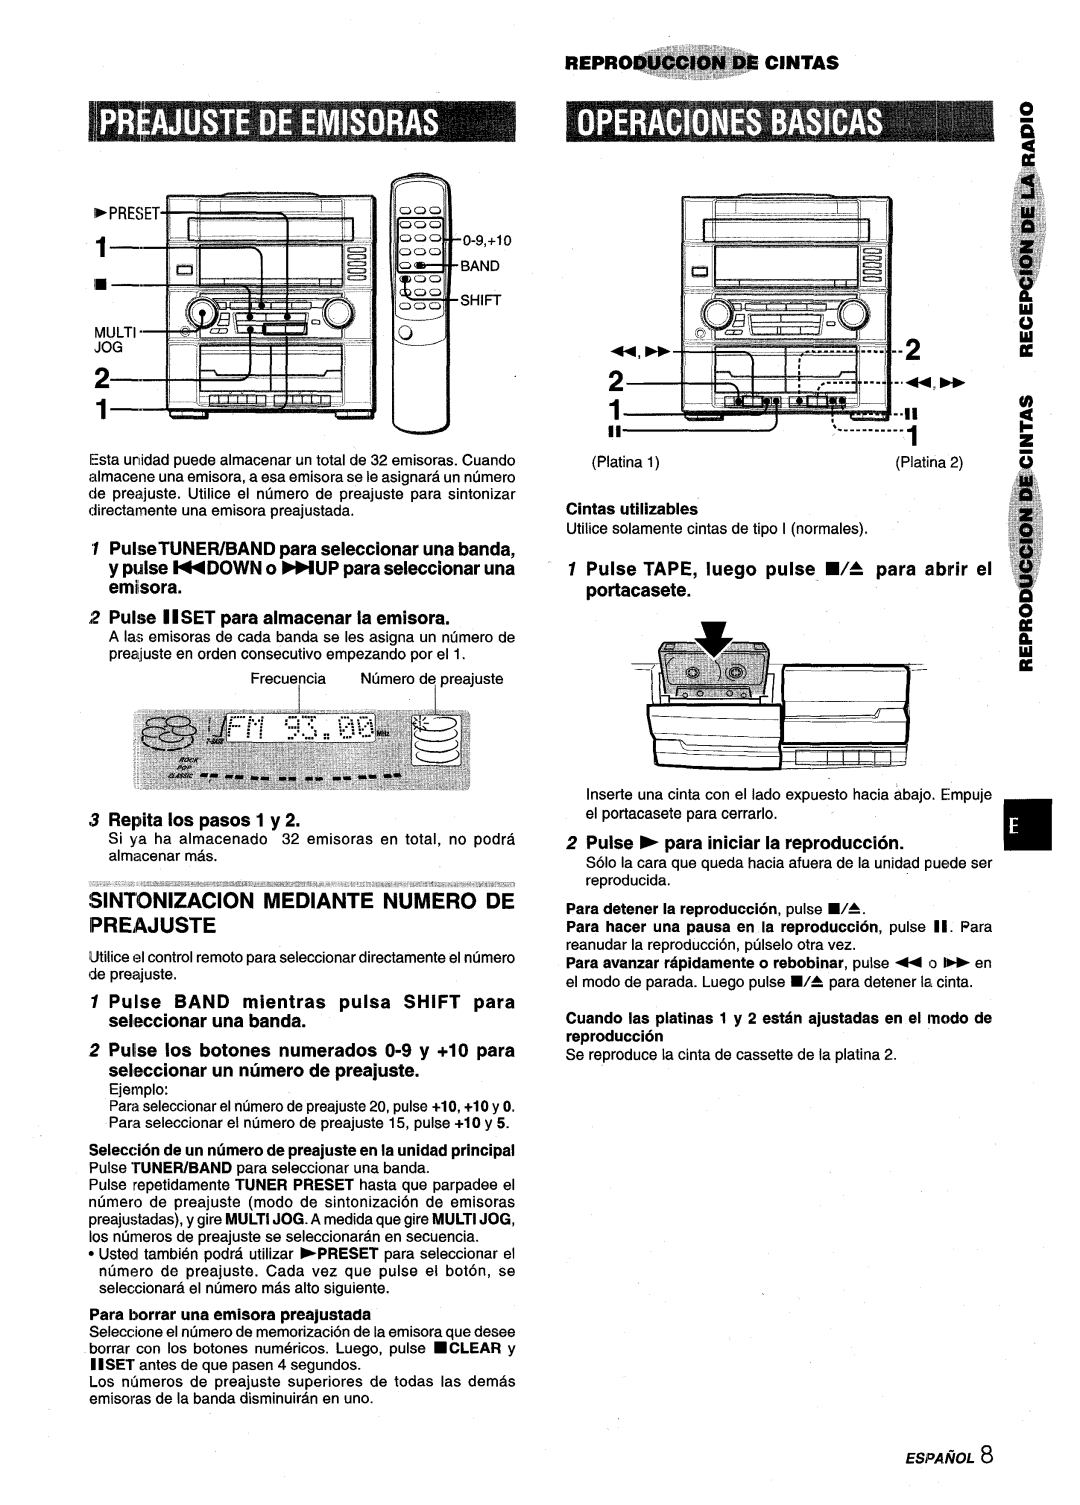 Aiwa XR-M75 manual Sintonizacion Mediante Numero De Preajuste, 1 -T~”QQt--l, Pulse 11SET para almacenar la emisora 